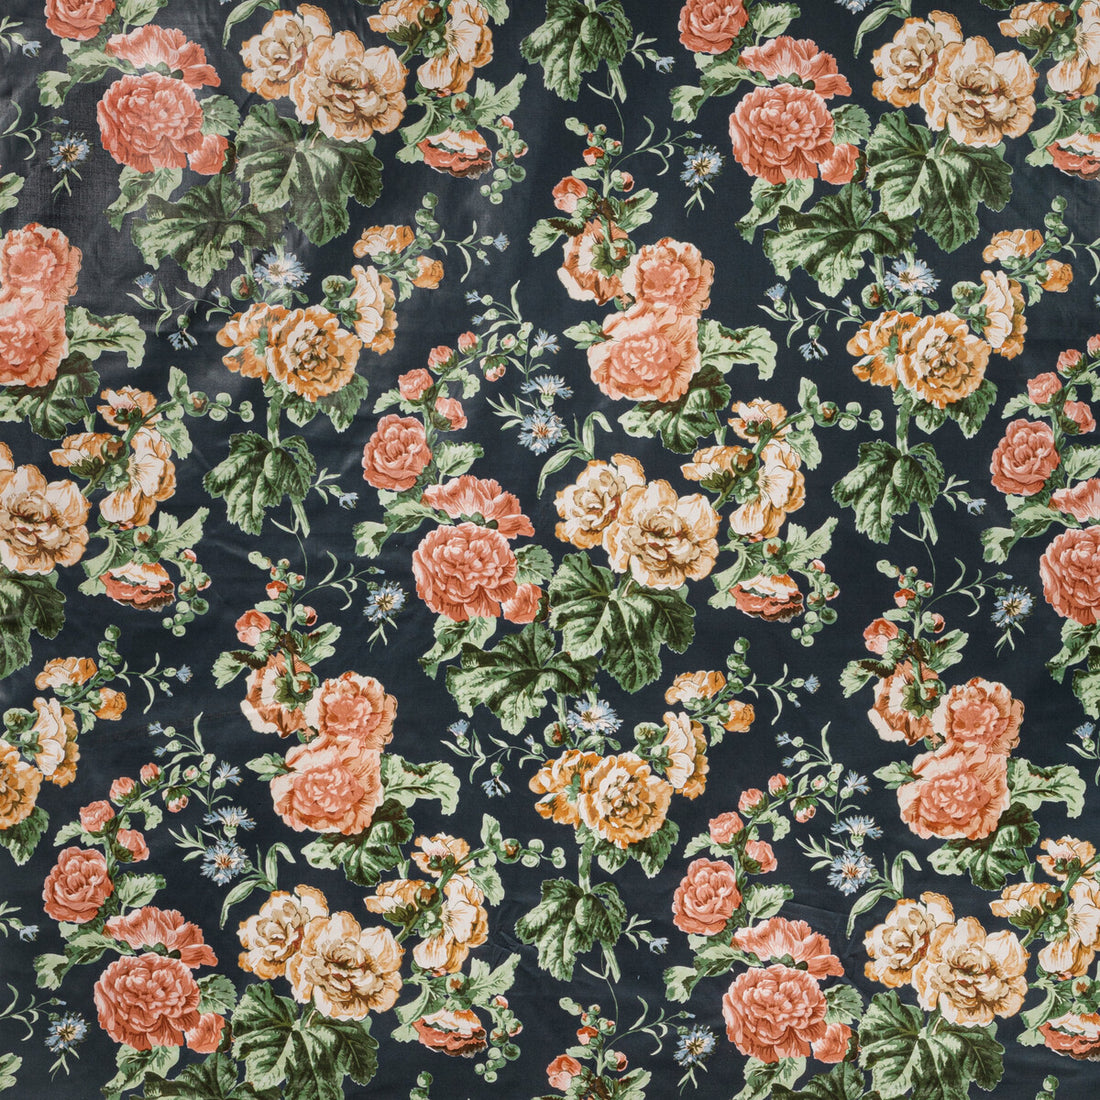 Upton Cotton fabric in navy/coral color - pattern 2020221.524.0 - by Lee Jofa in the Oscar De La Renta IV collection